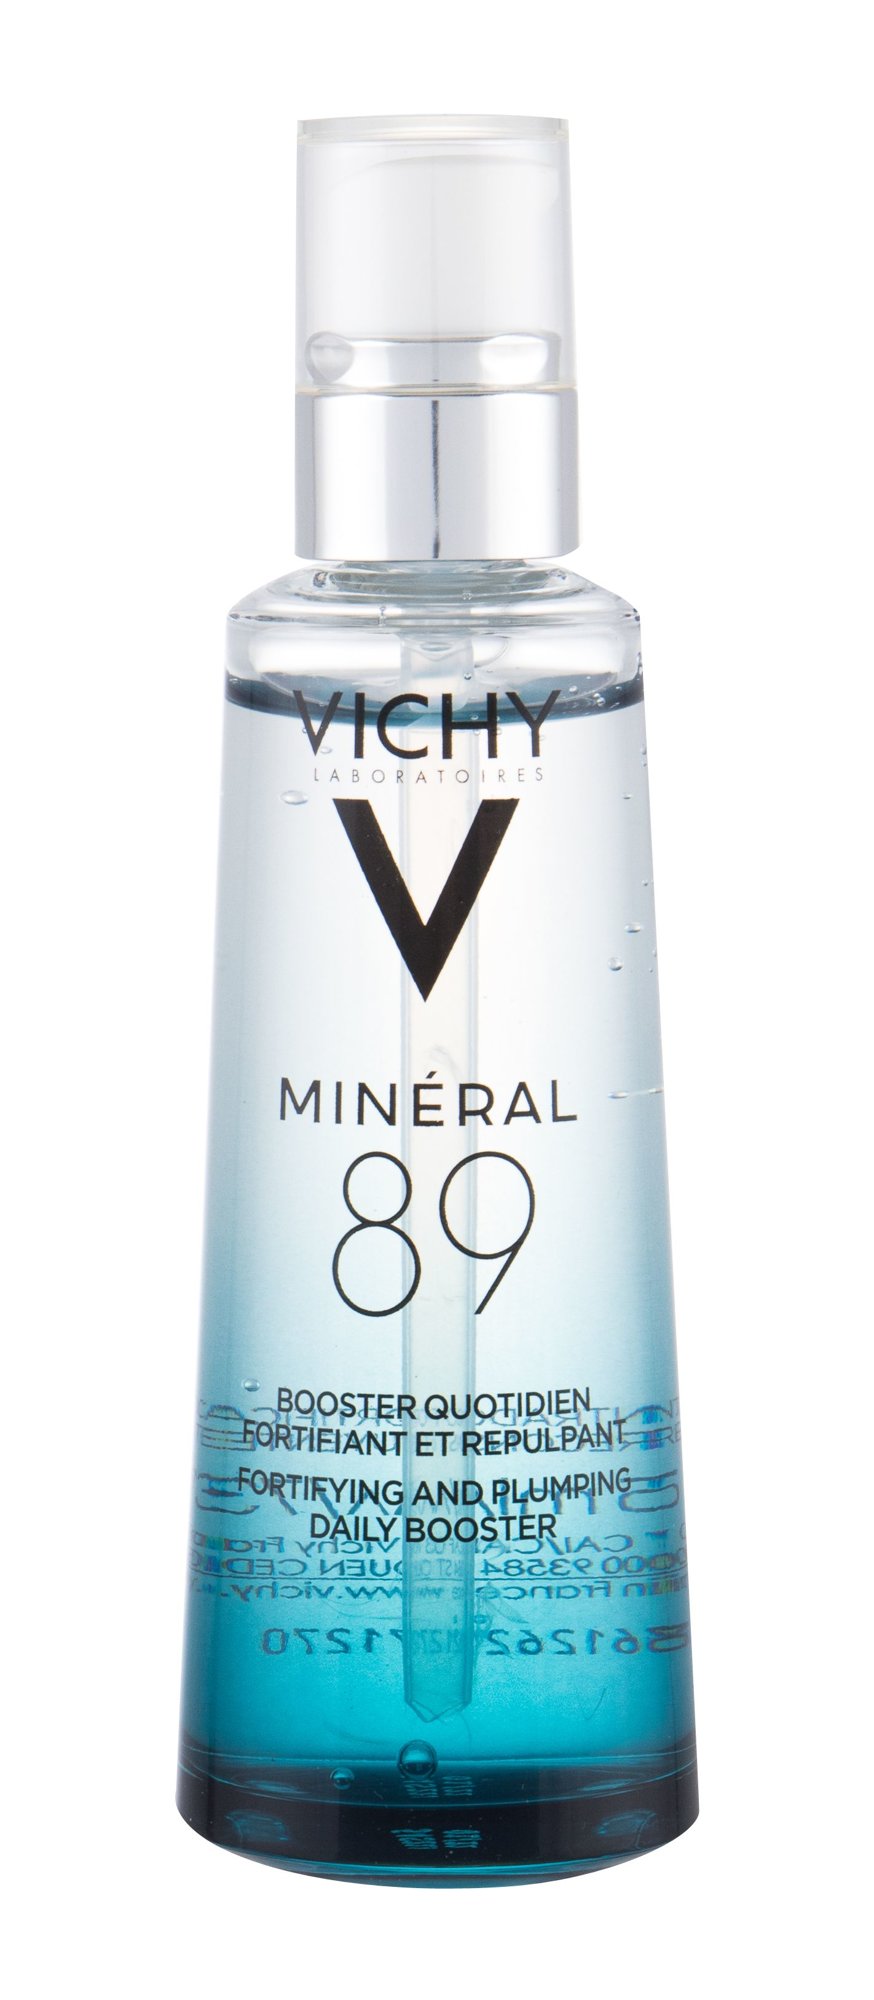 Vichy Minéral 89 75ml Veido serumas